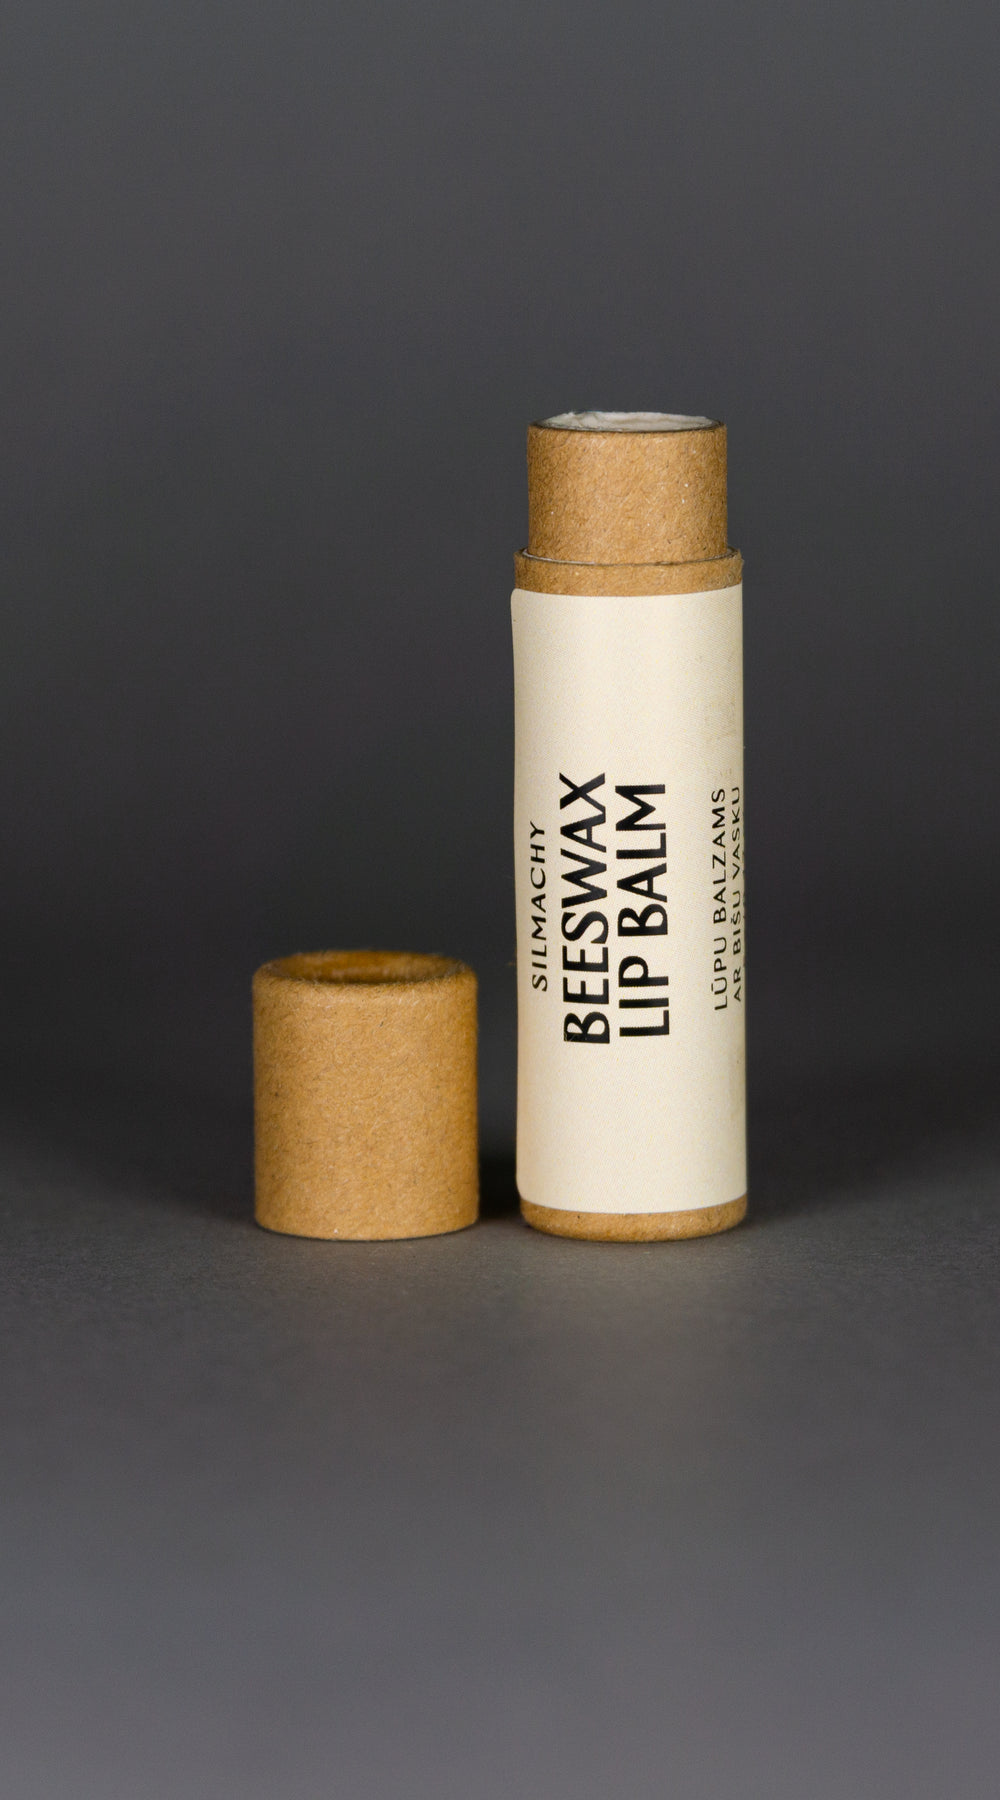 Lip balm in an eco-cardboard packaging